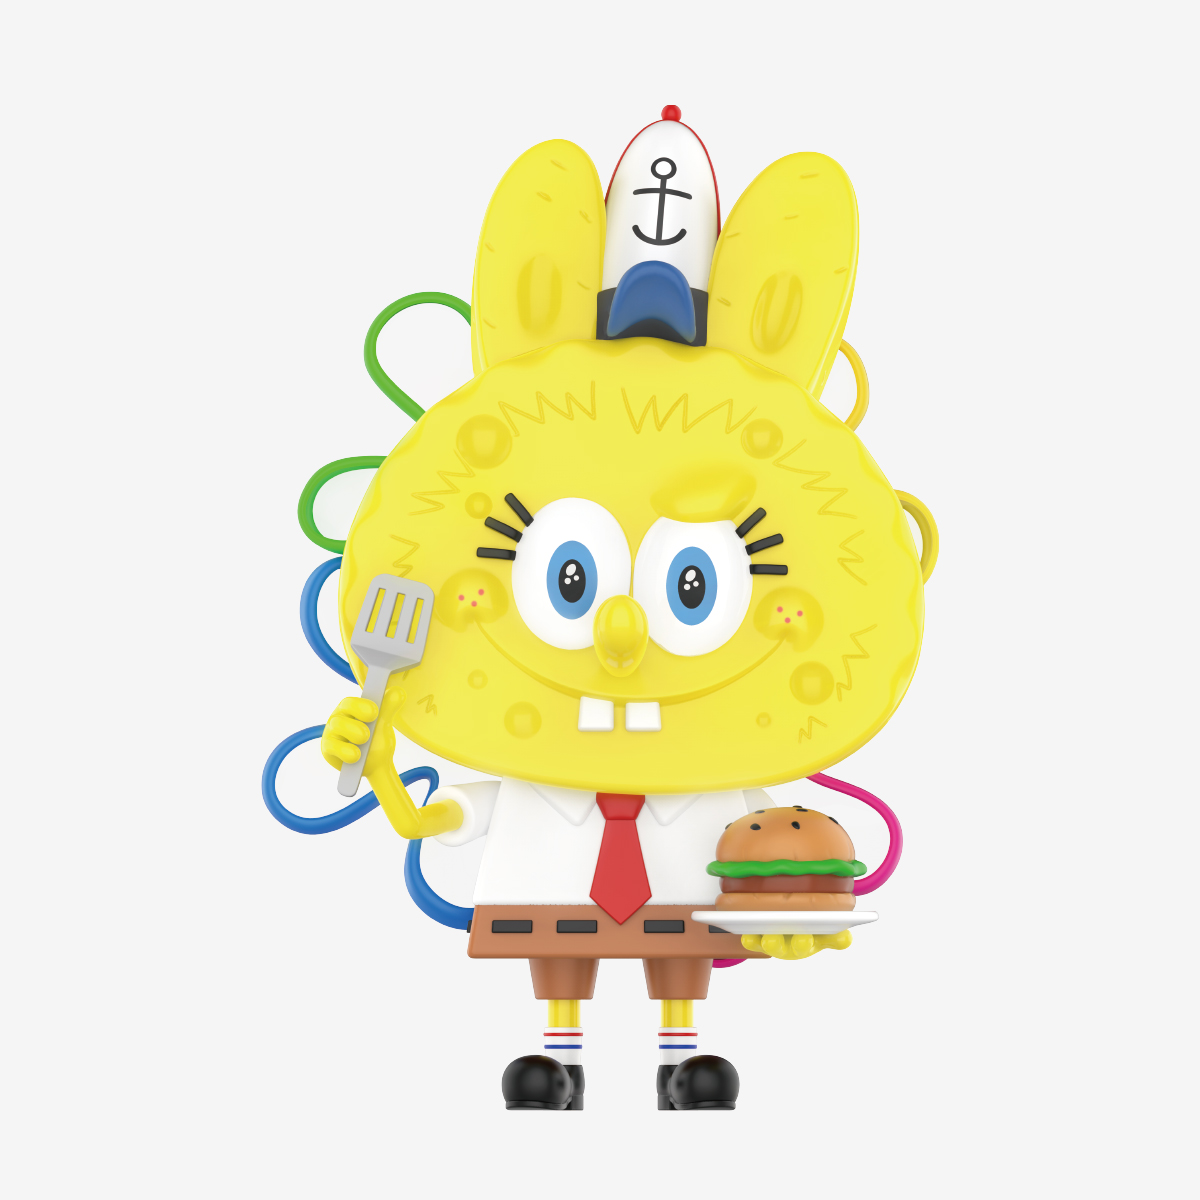 Spongebob Monsters Blind Box Series by How2Work x POP MART – Strangecat Toys